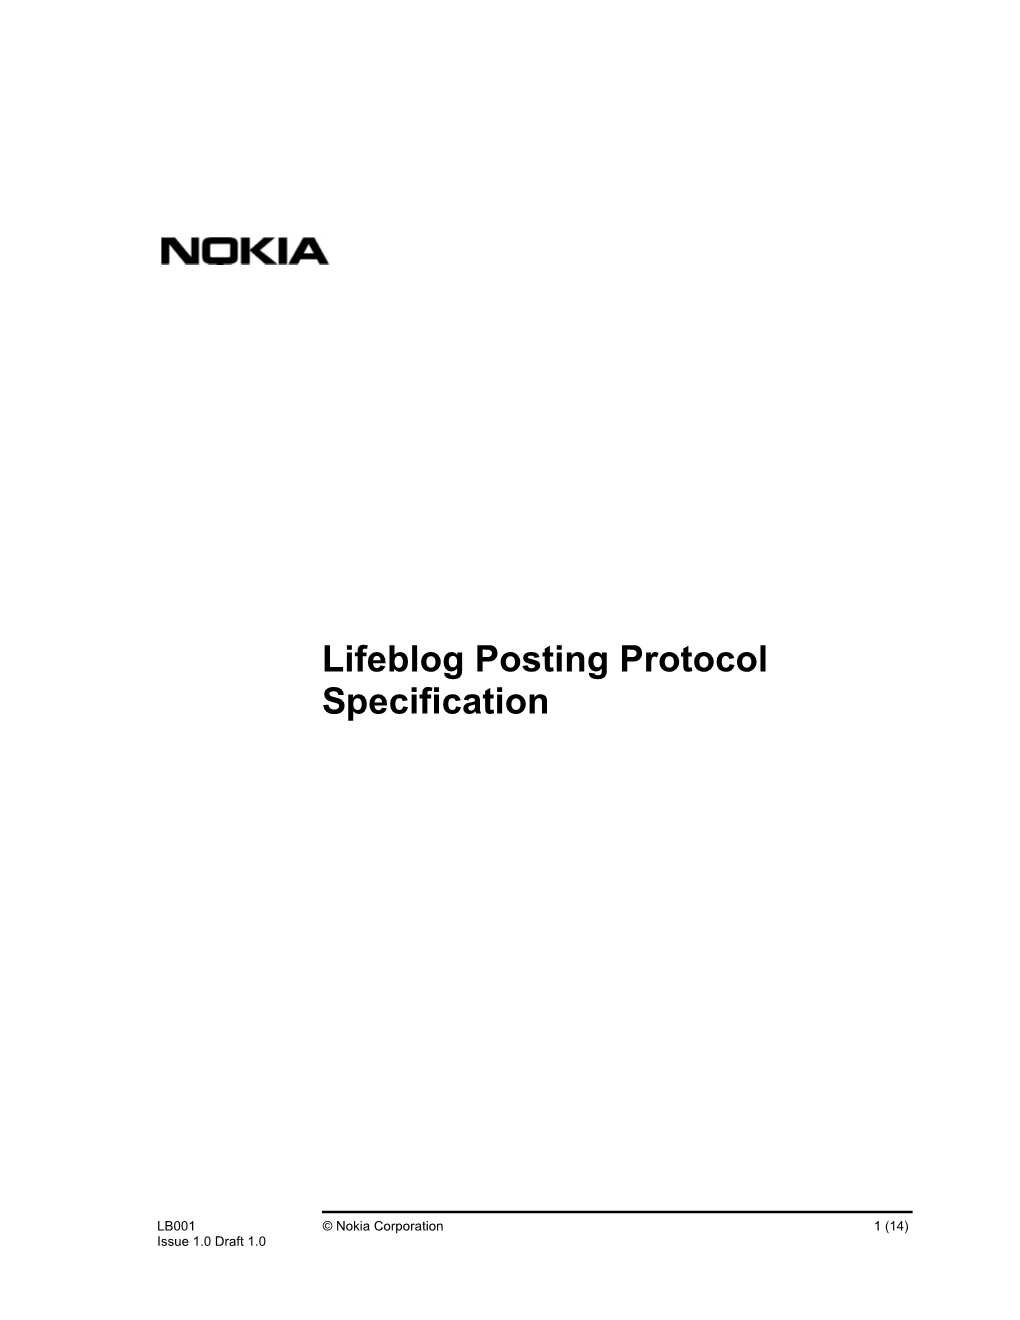 Lifeblog Posting Protocol Specification